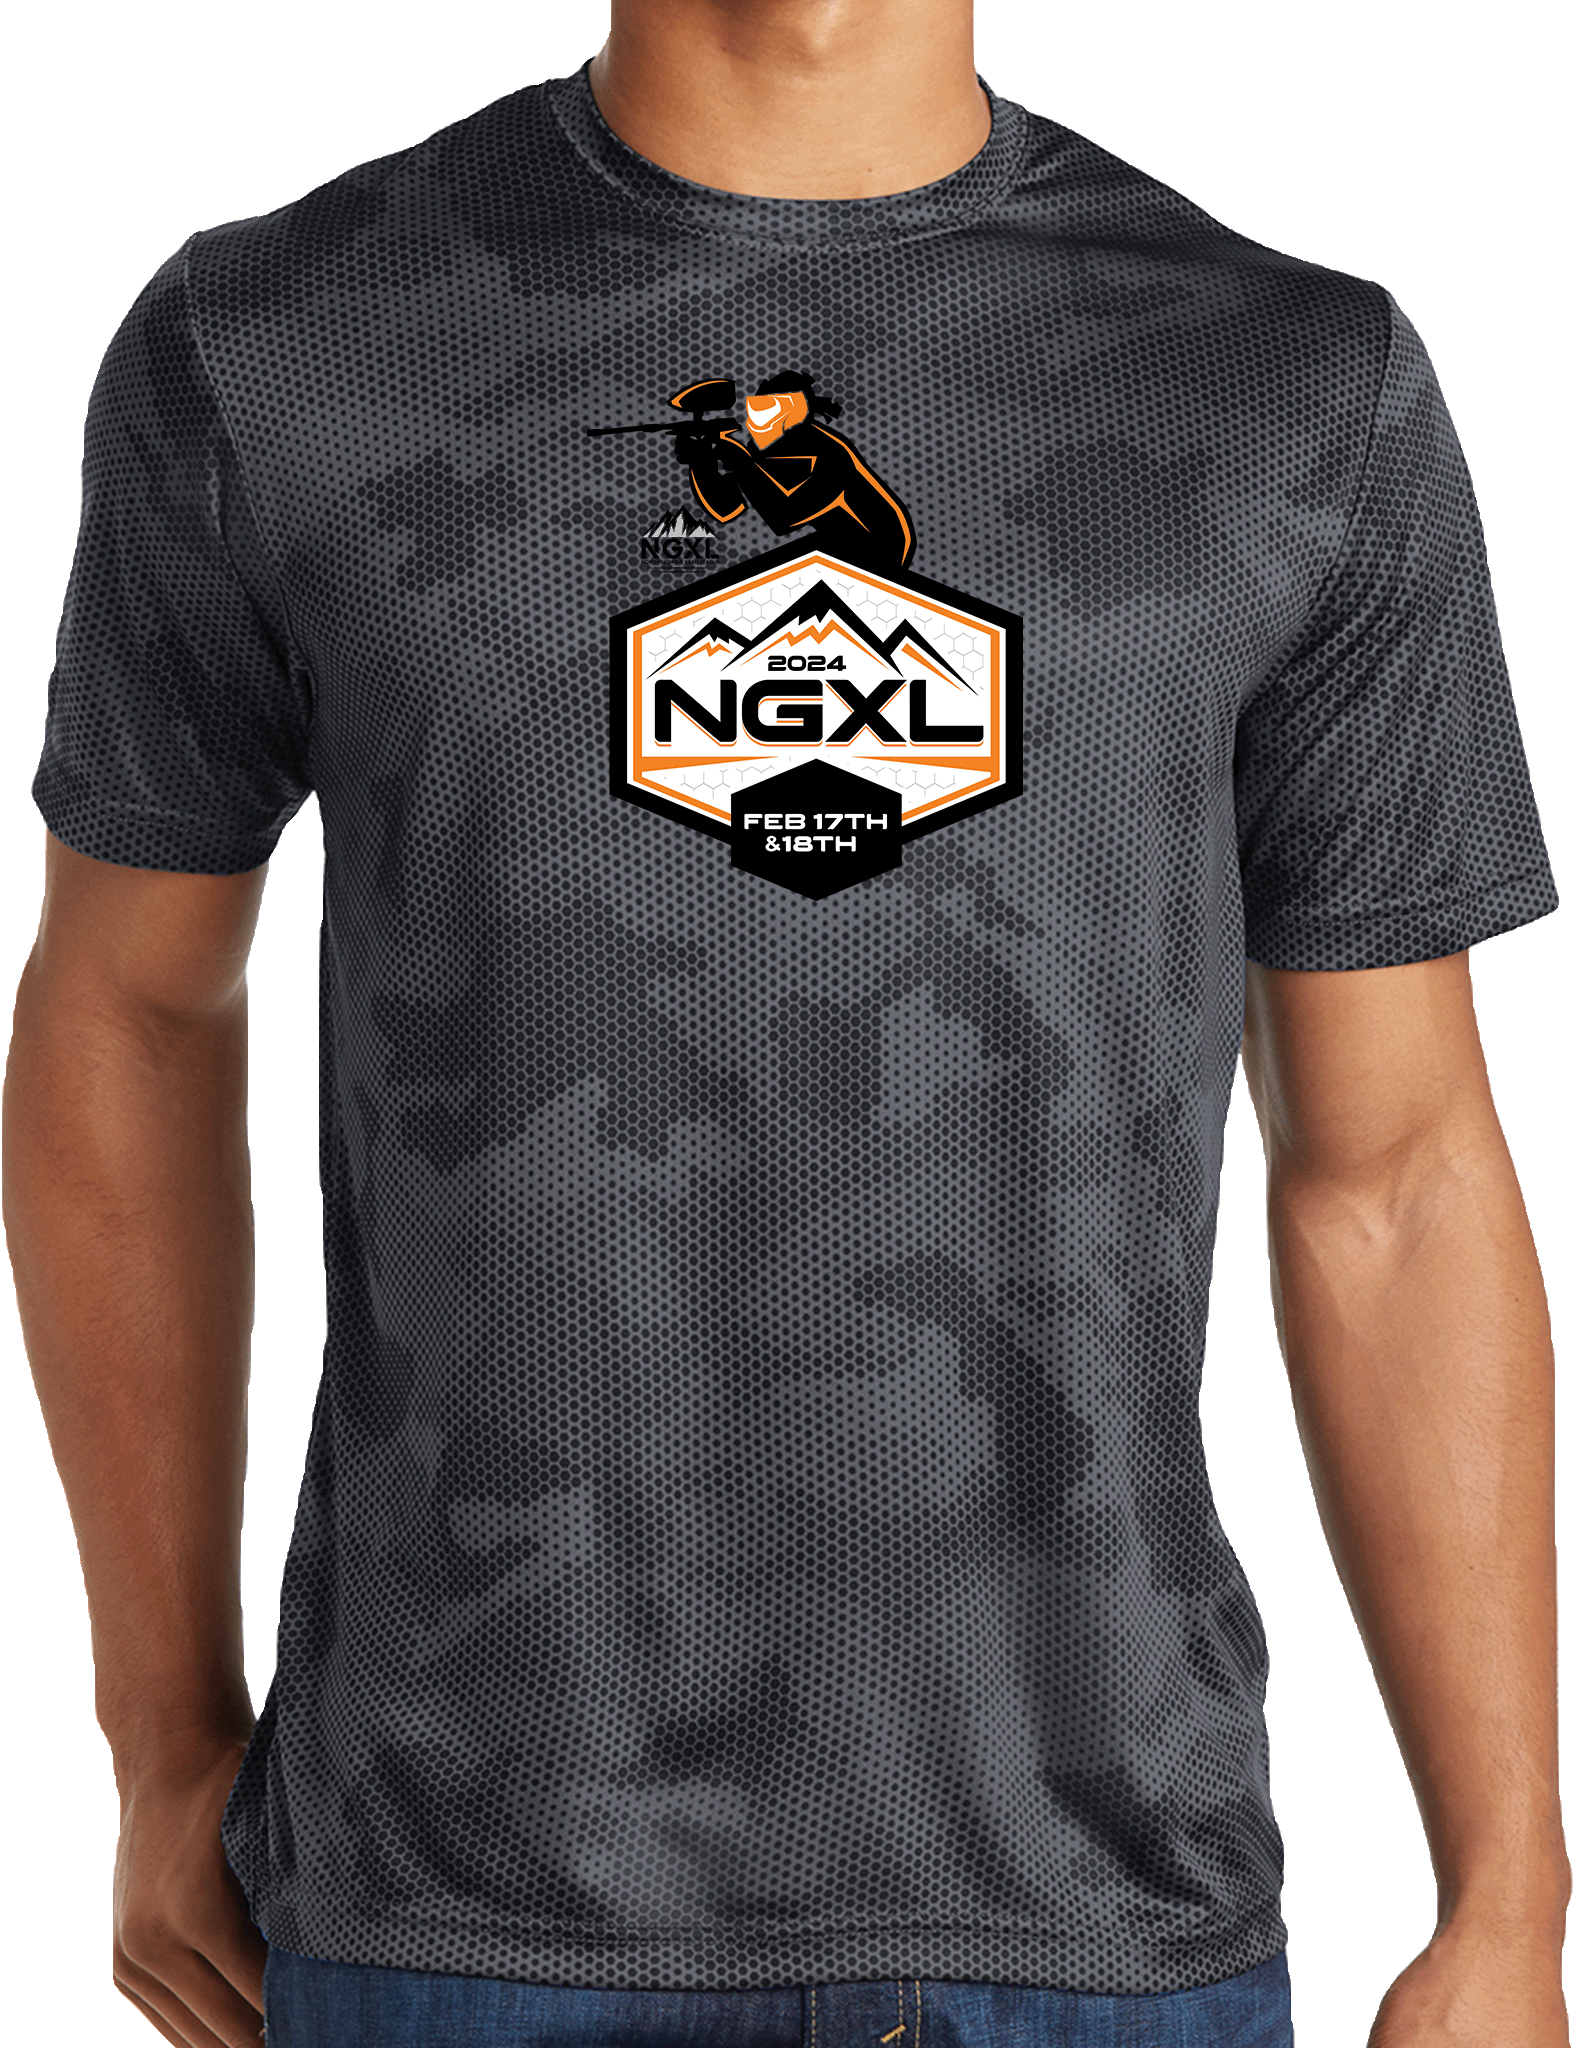 Performance Shirts - 2024 NGXL #1